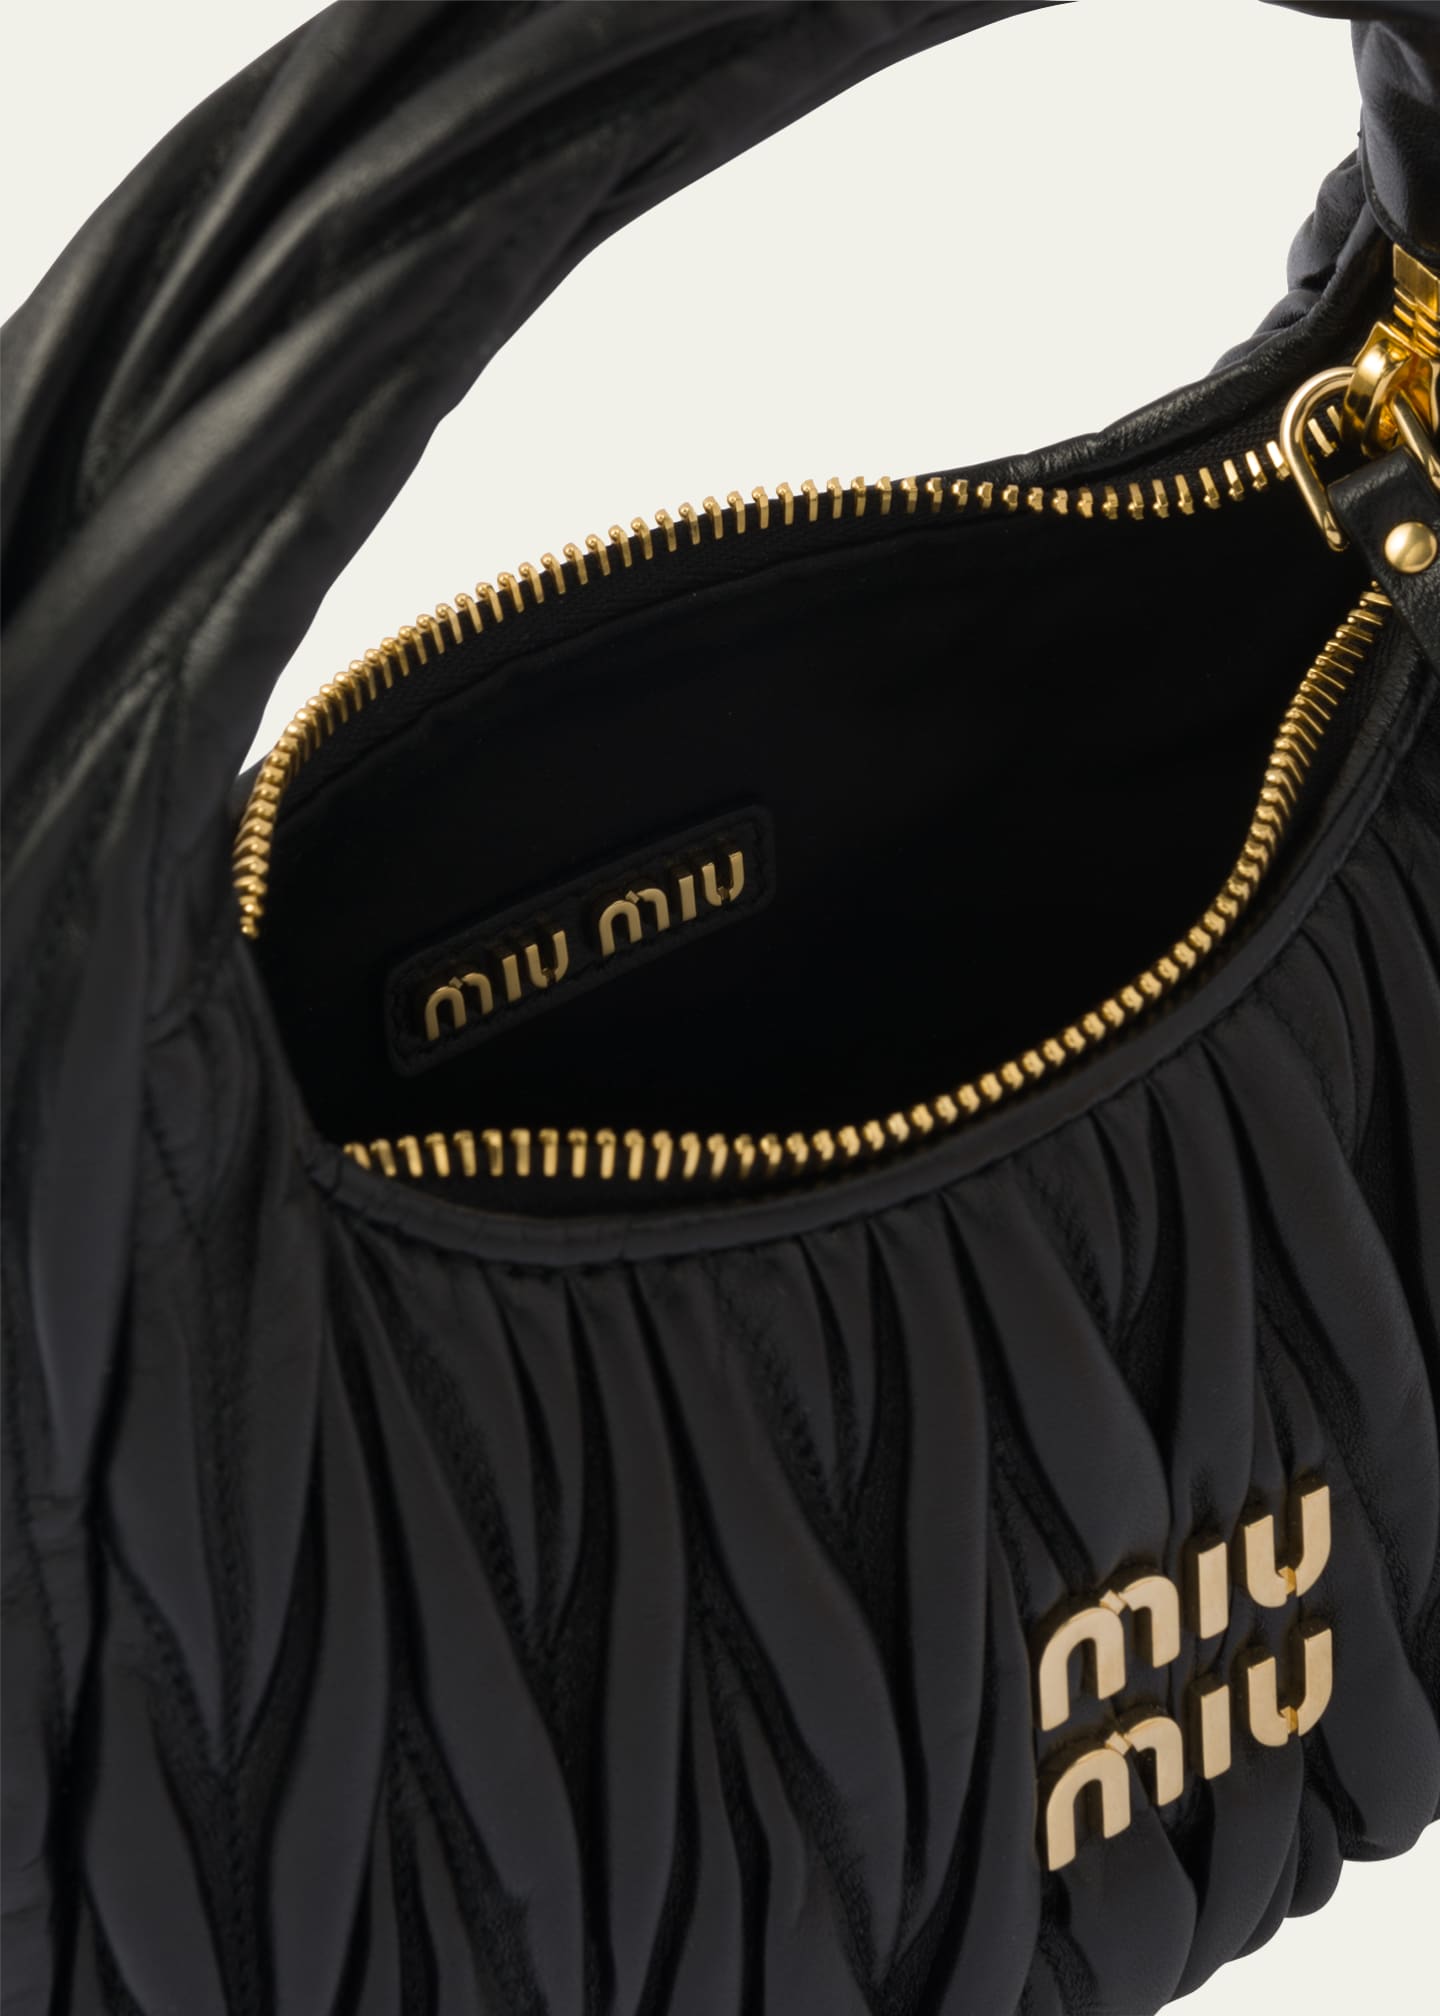 Miu Miu Quilted Top Handle Hobo Bag